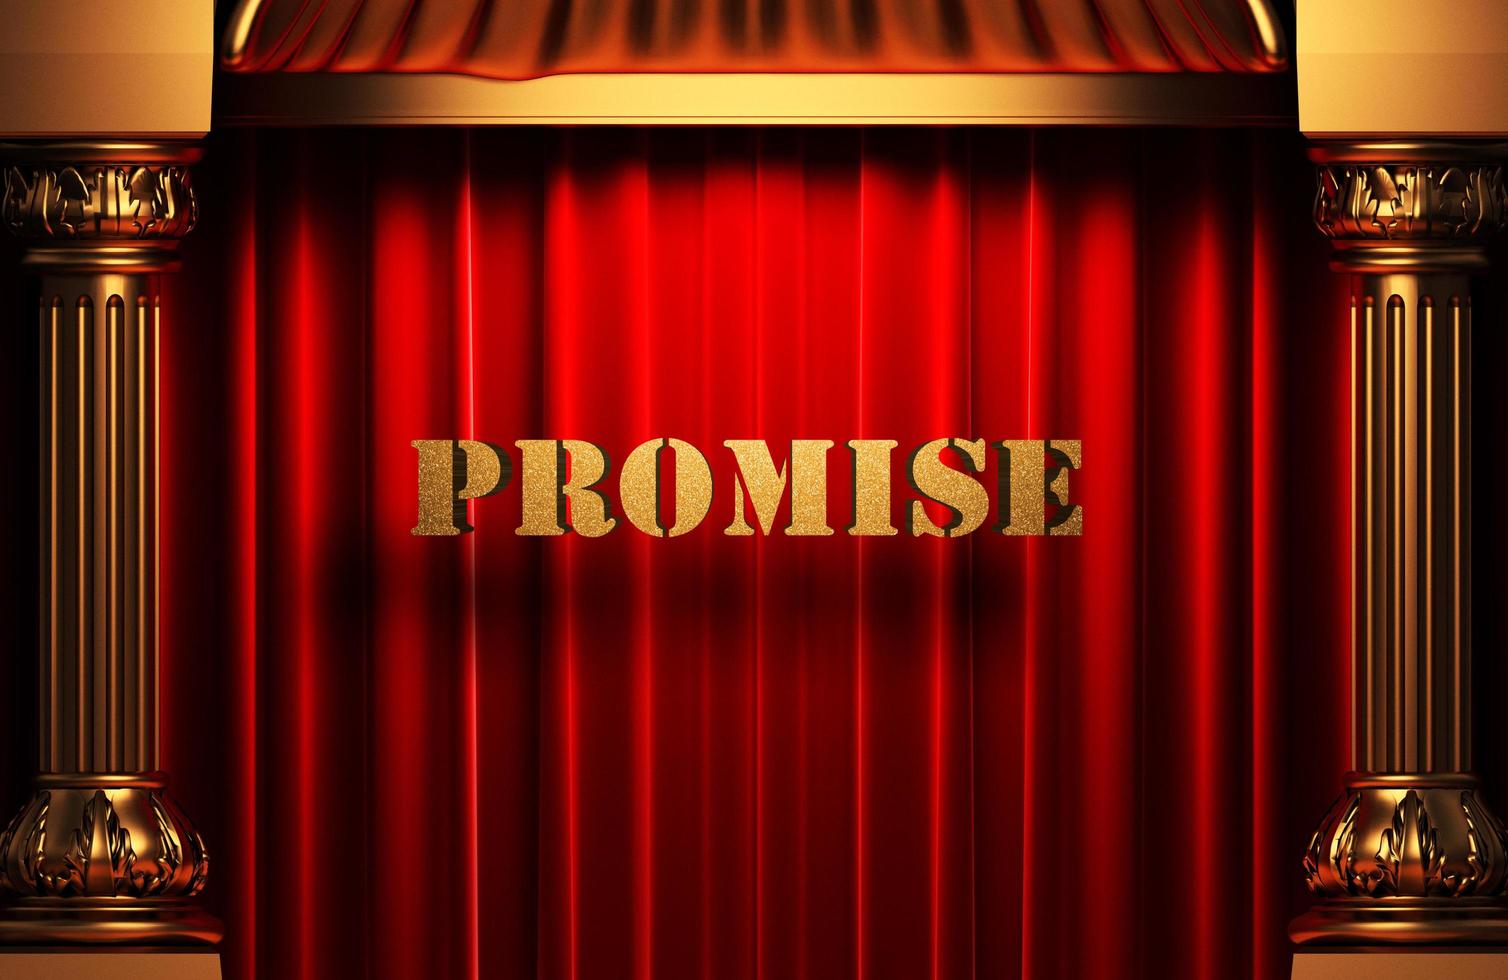 promessa palavra dourada na cortina vermelha foto